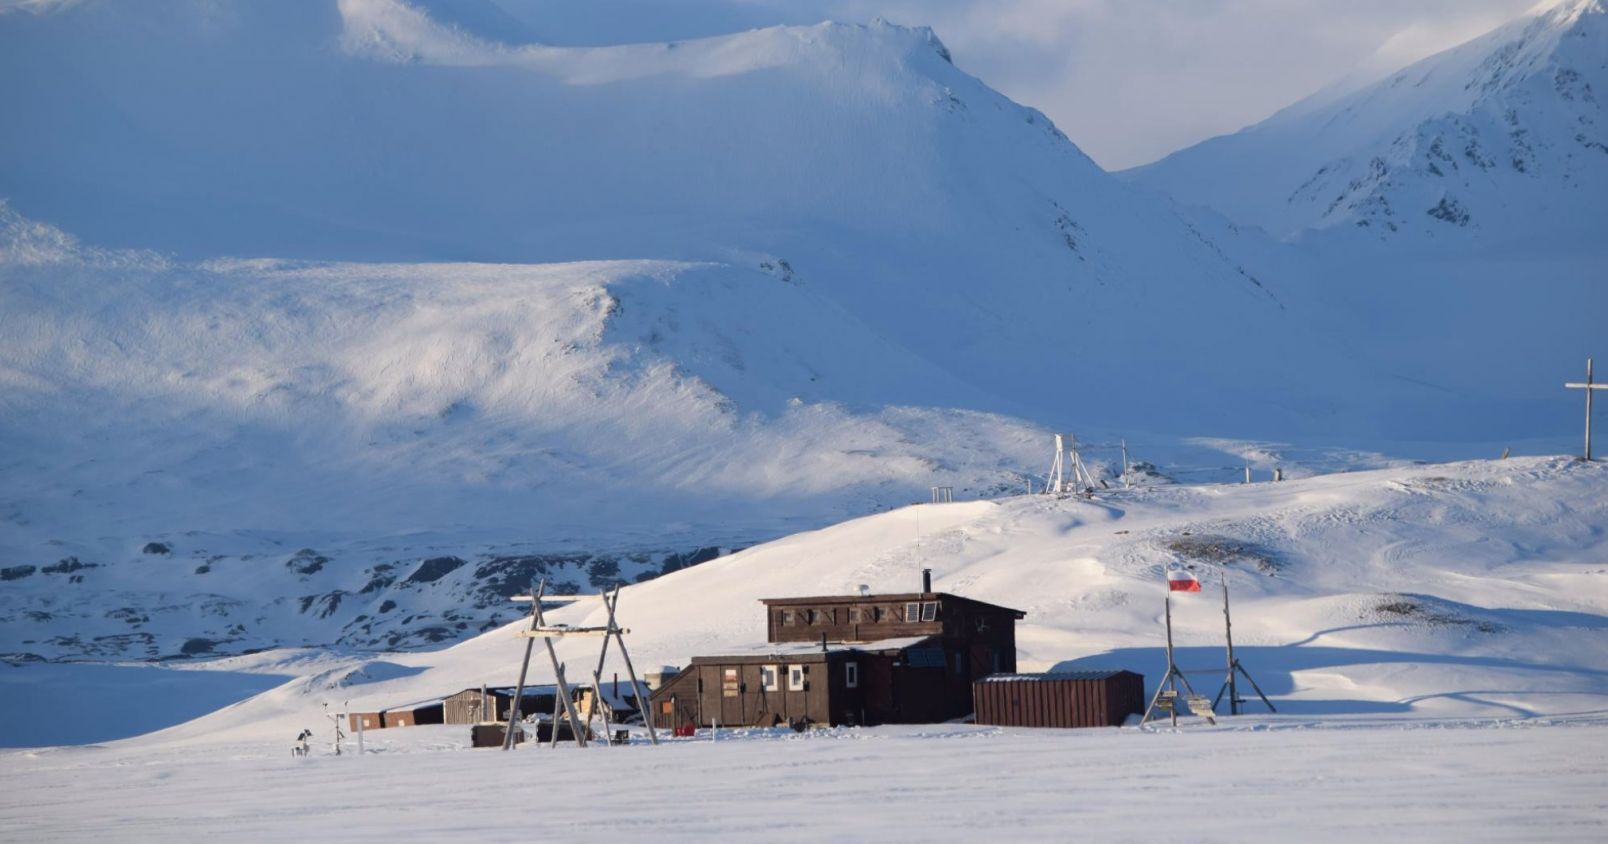 Stacja polarna UMK na Spitsbergenie Stacja polarna na Spitsbergenie na tle ośnieżonych gór